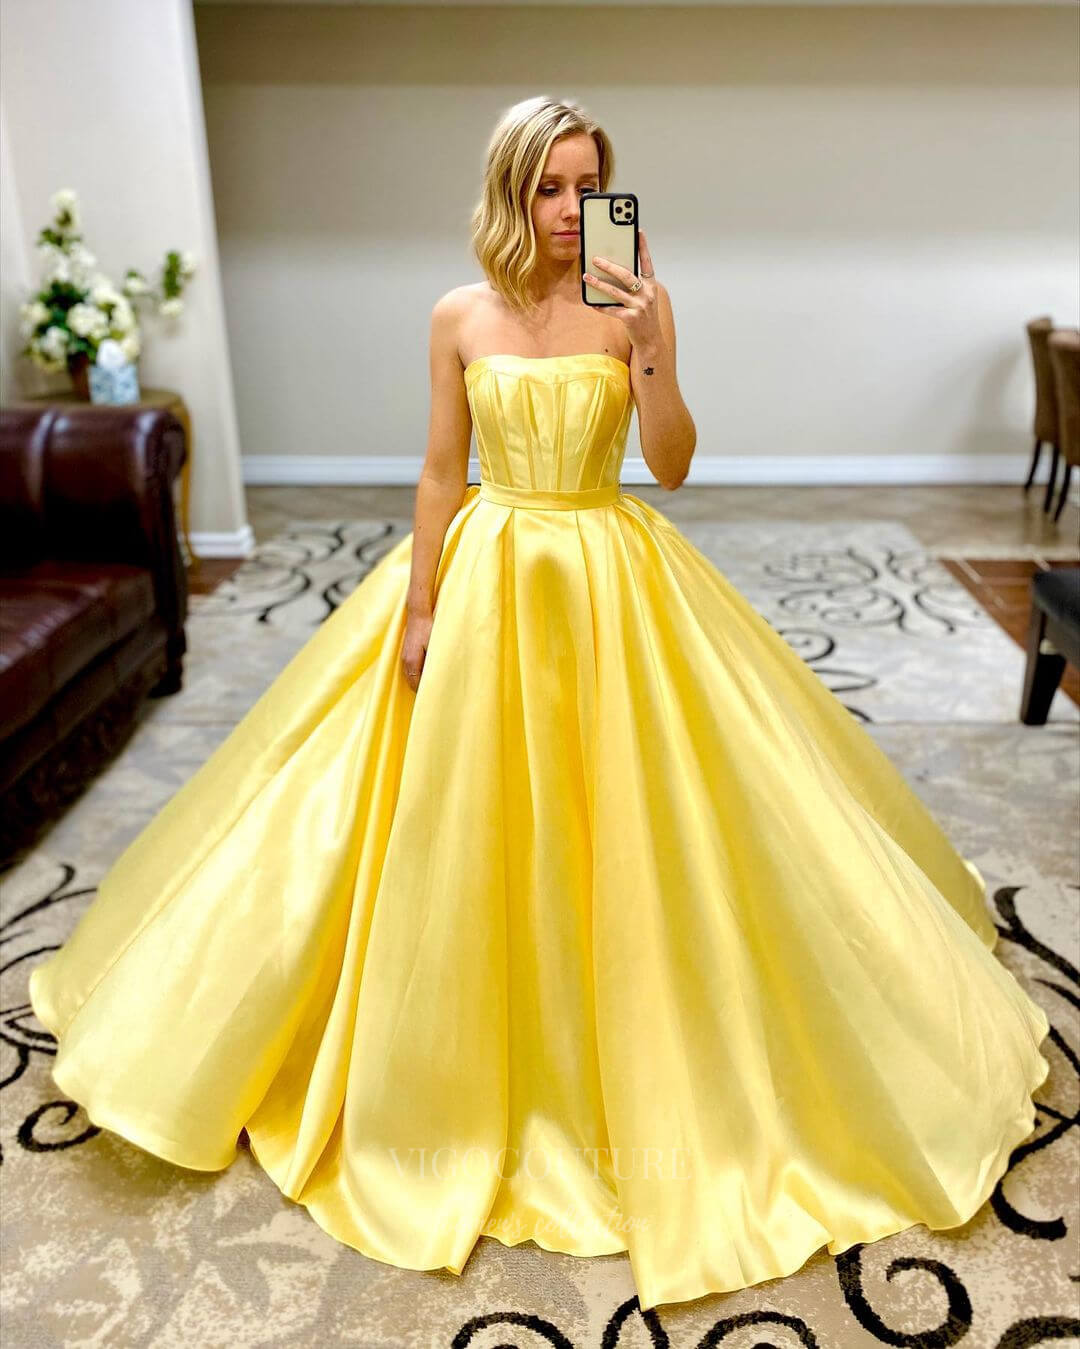 vigocouture-Strapless Satin A-Line Prom Dress 20822-Prom Dresses-vigocouture-Yellow-US2-